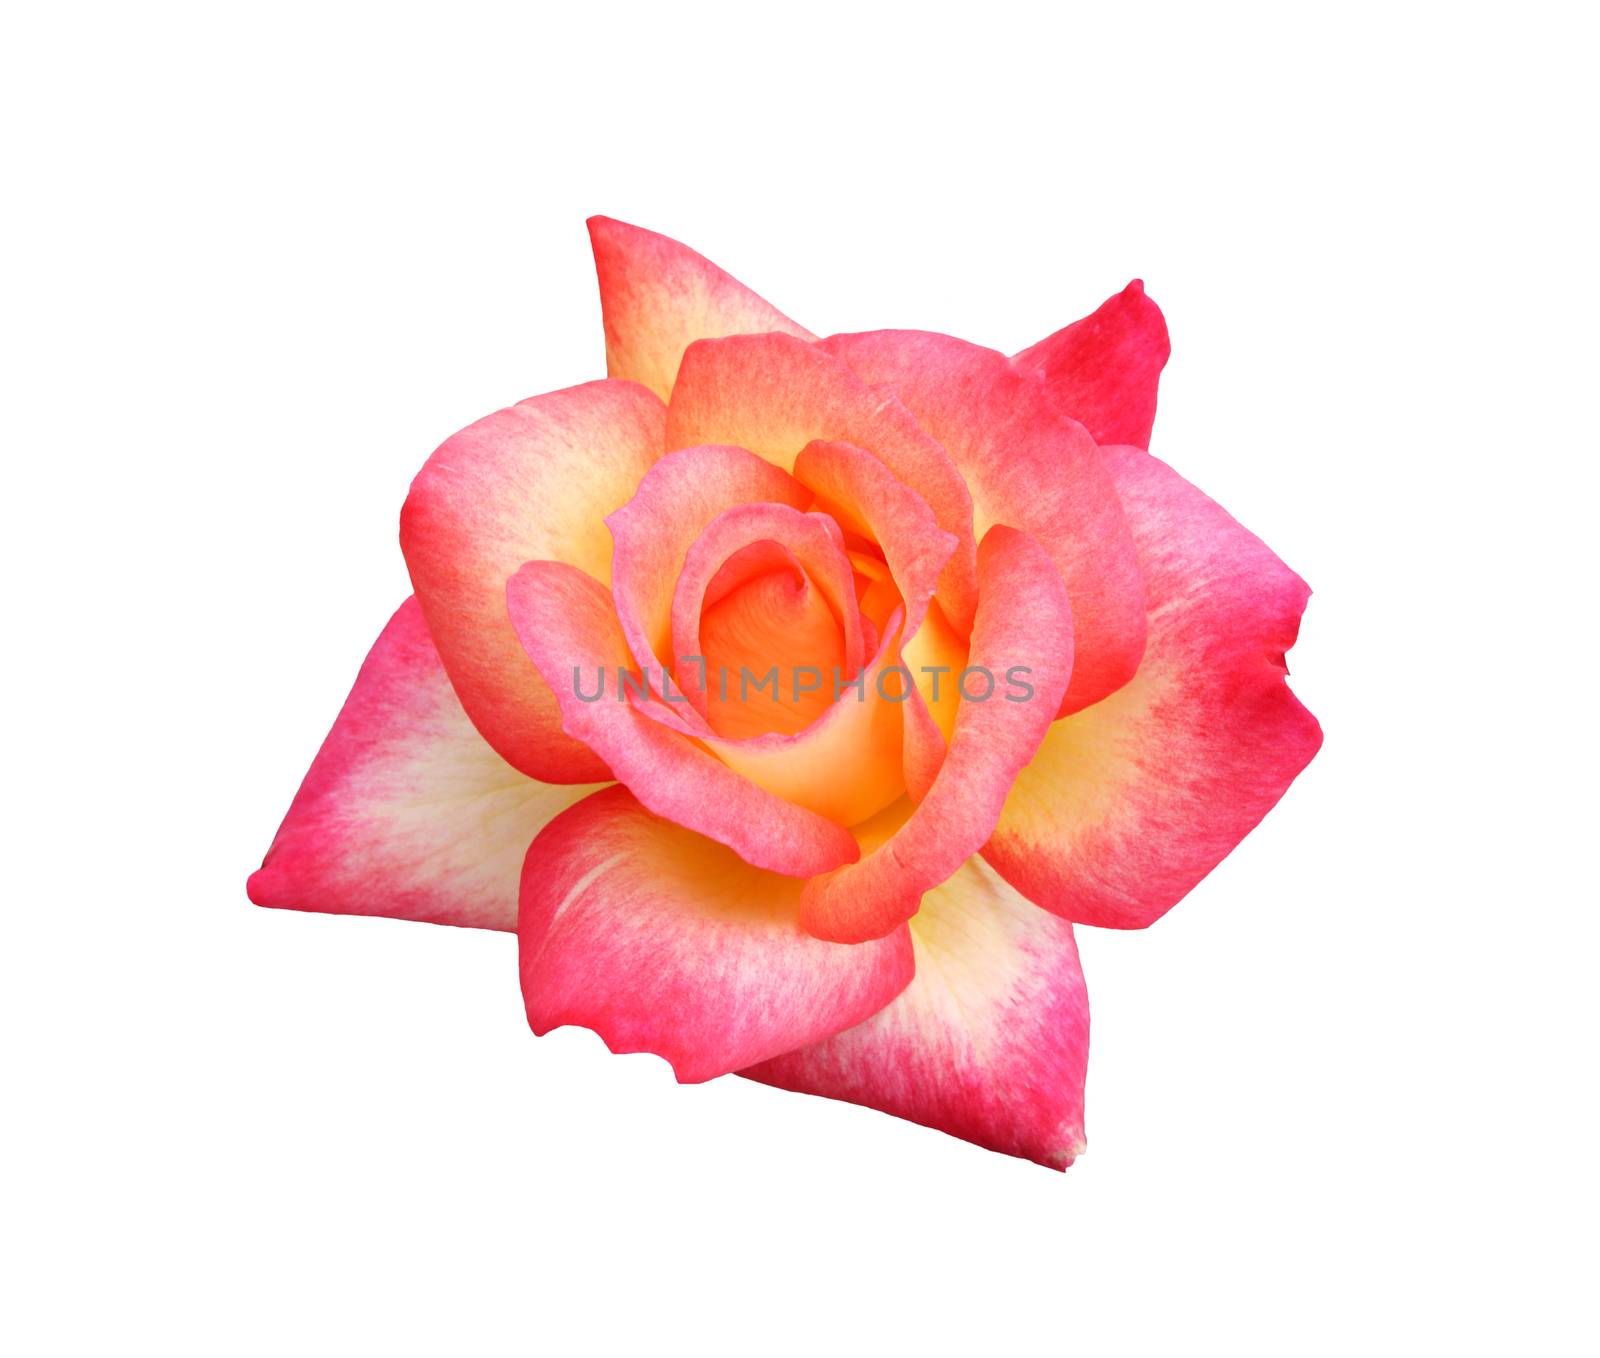 Rainbow Sorbet Rose by songbird839